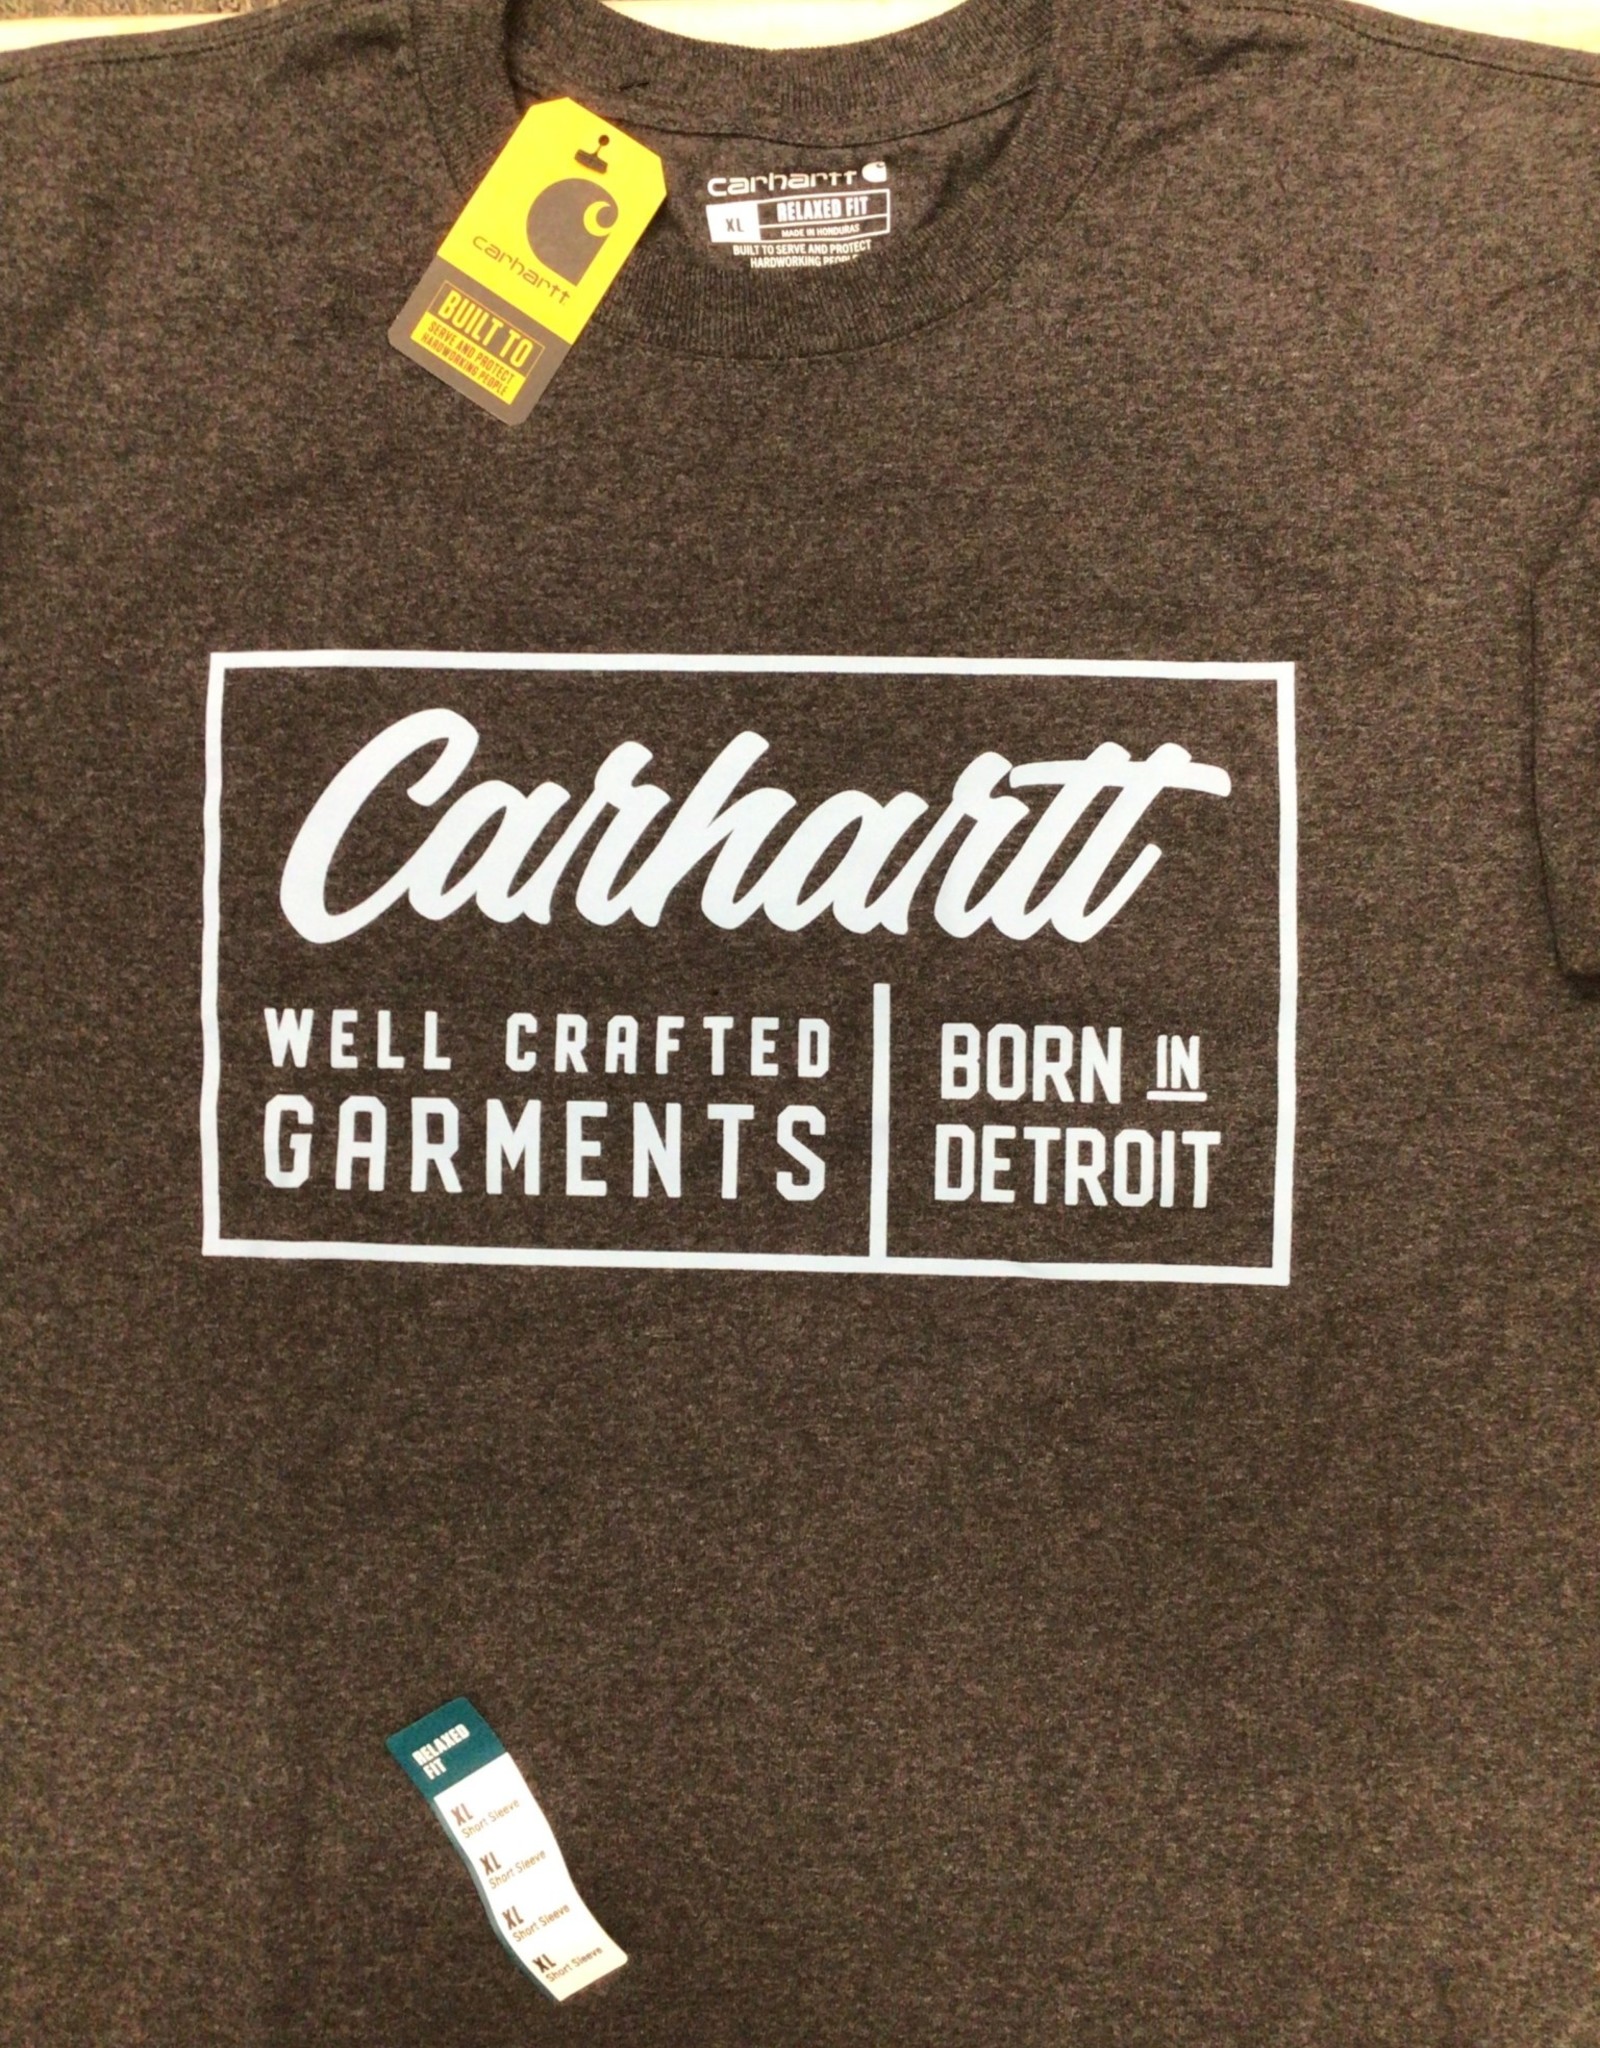 Carhartt Carhartt 105177 Relaxed Fit Heavyweight Short Sleeve Crafted Graphic T-shirt Men’s